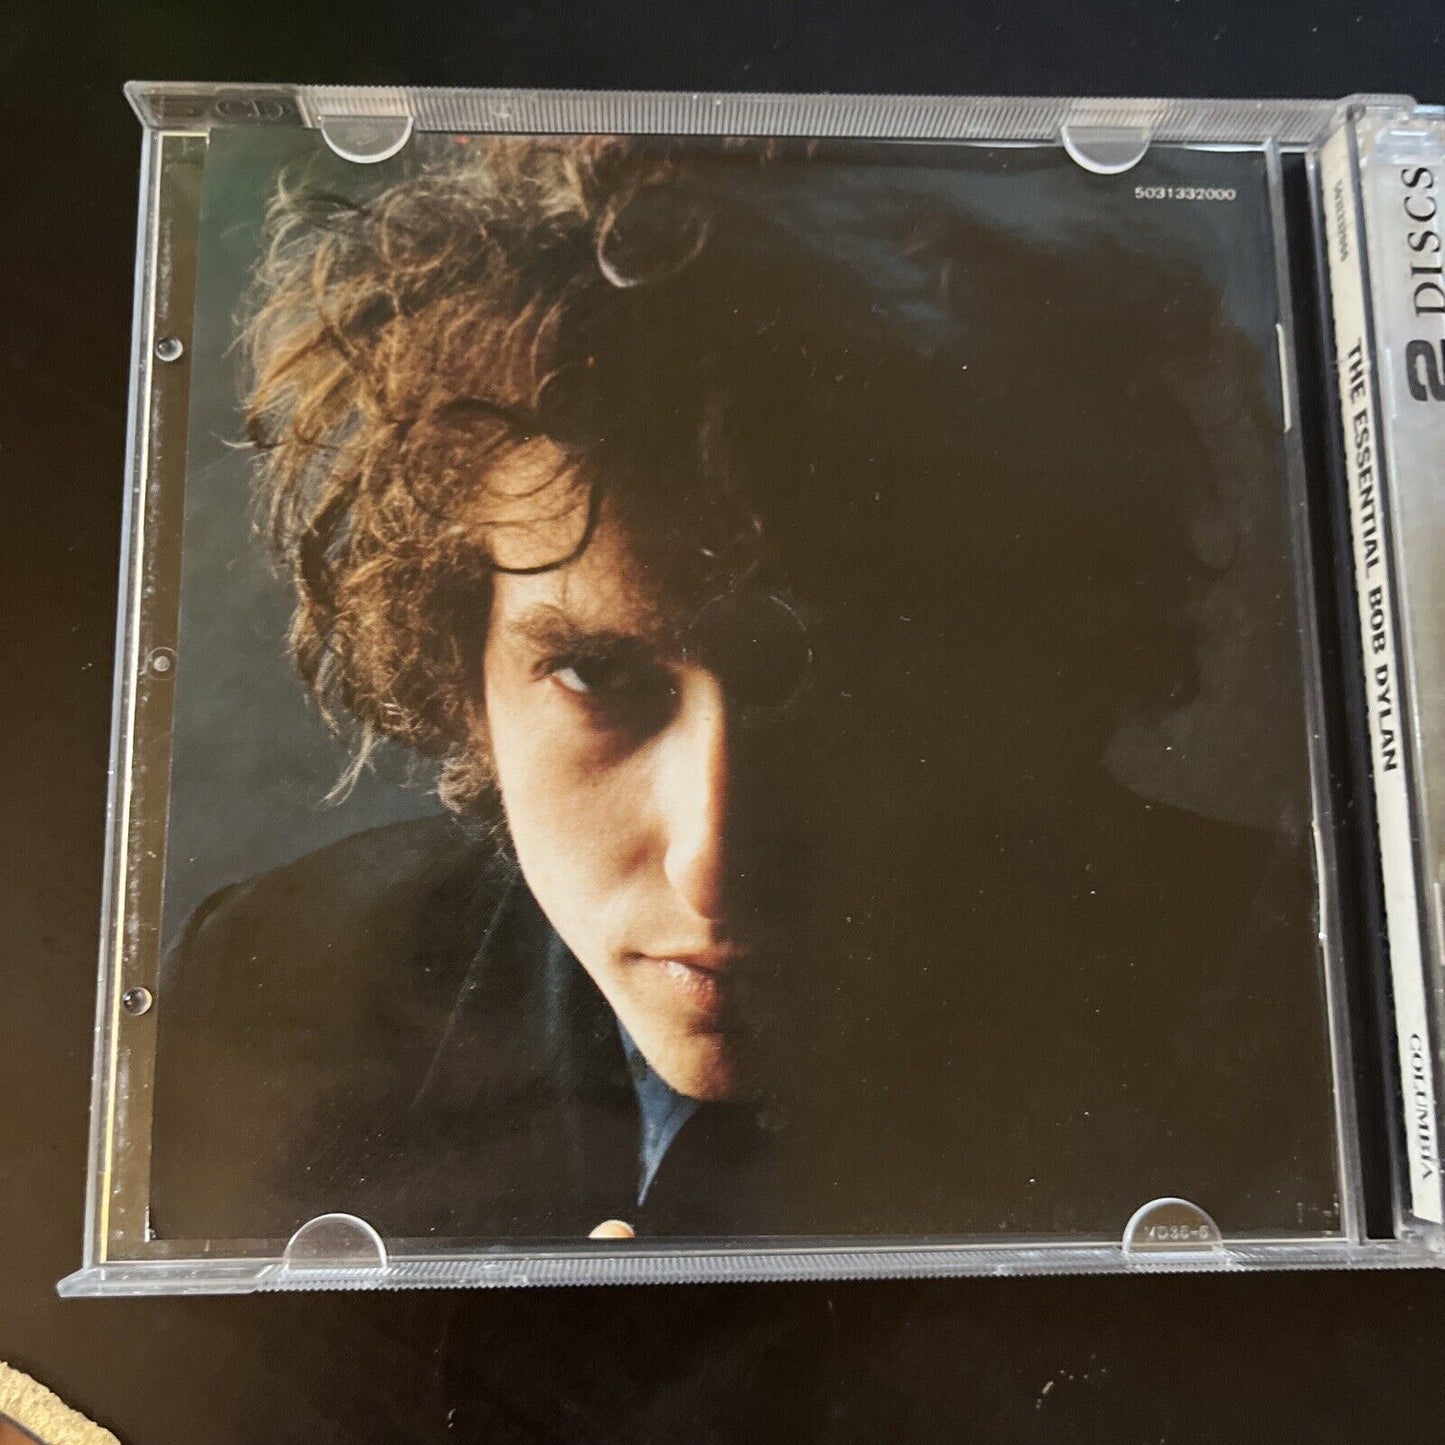 Bob Dylan - The Essential Bob Dylan (CD, 2000, 2-Disc)